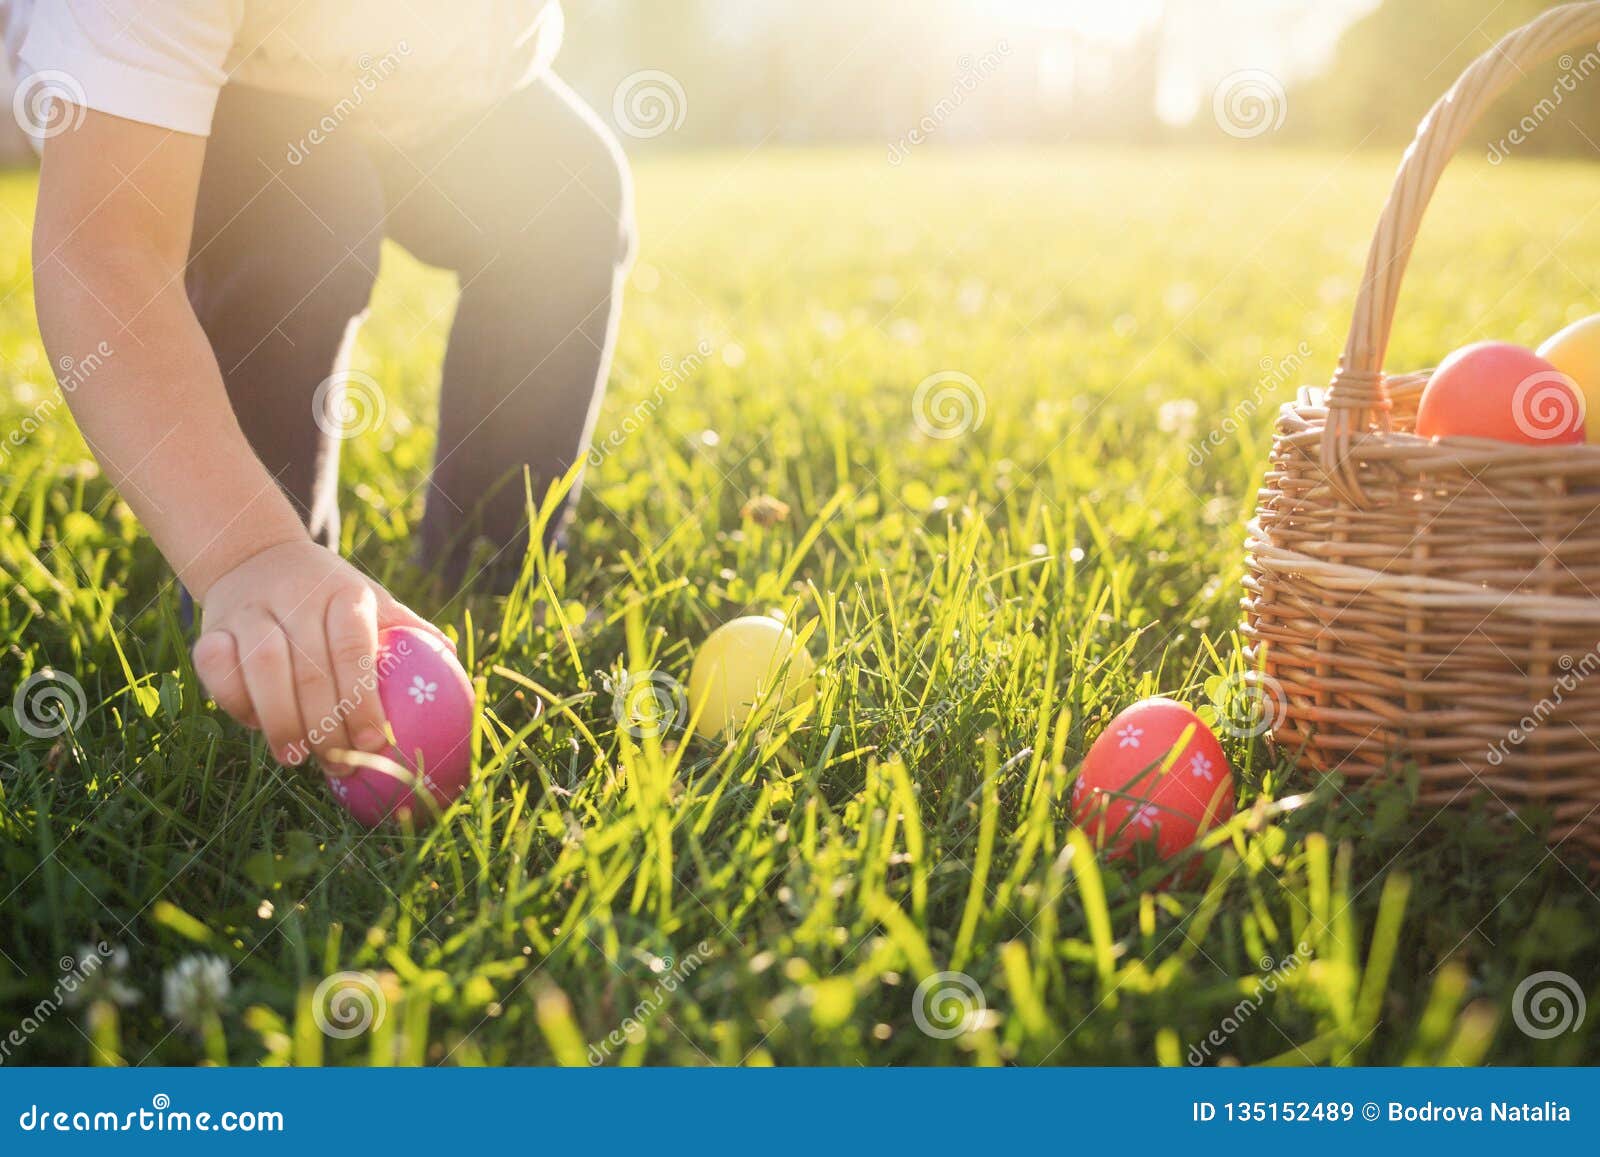 little girl hunts easter egg. child putting colorful eggs in a basket